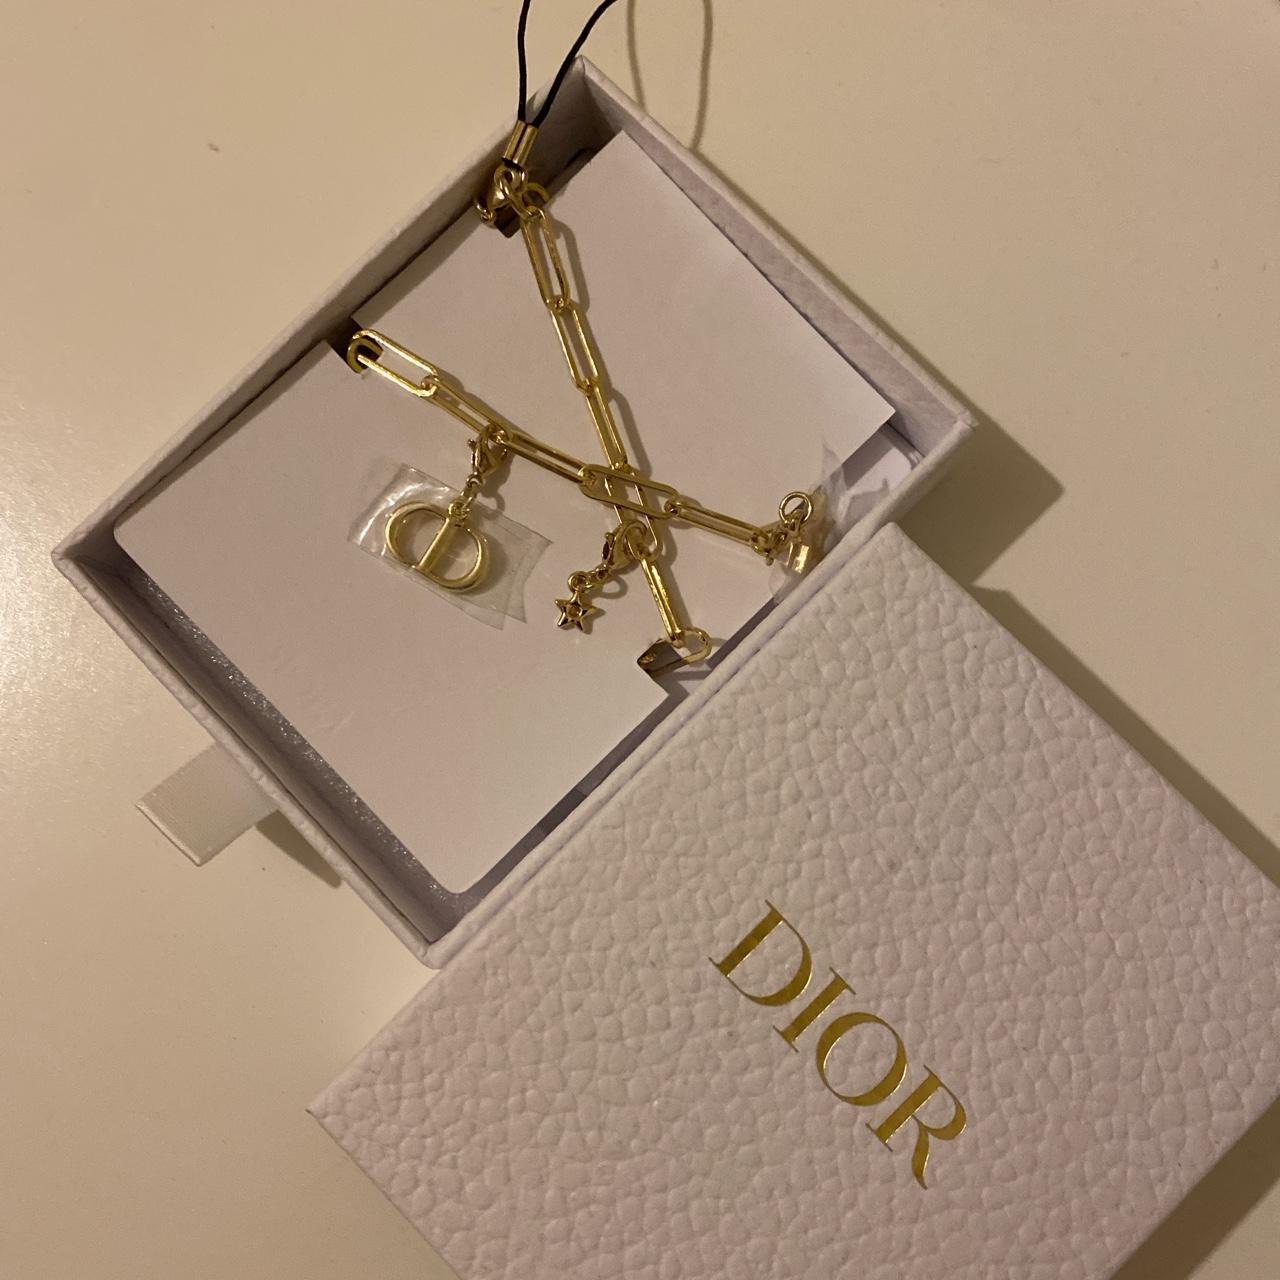 Dior phone-case - Depop